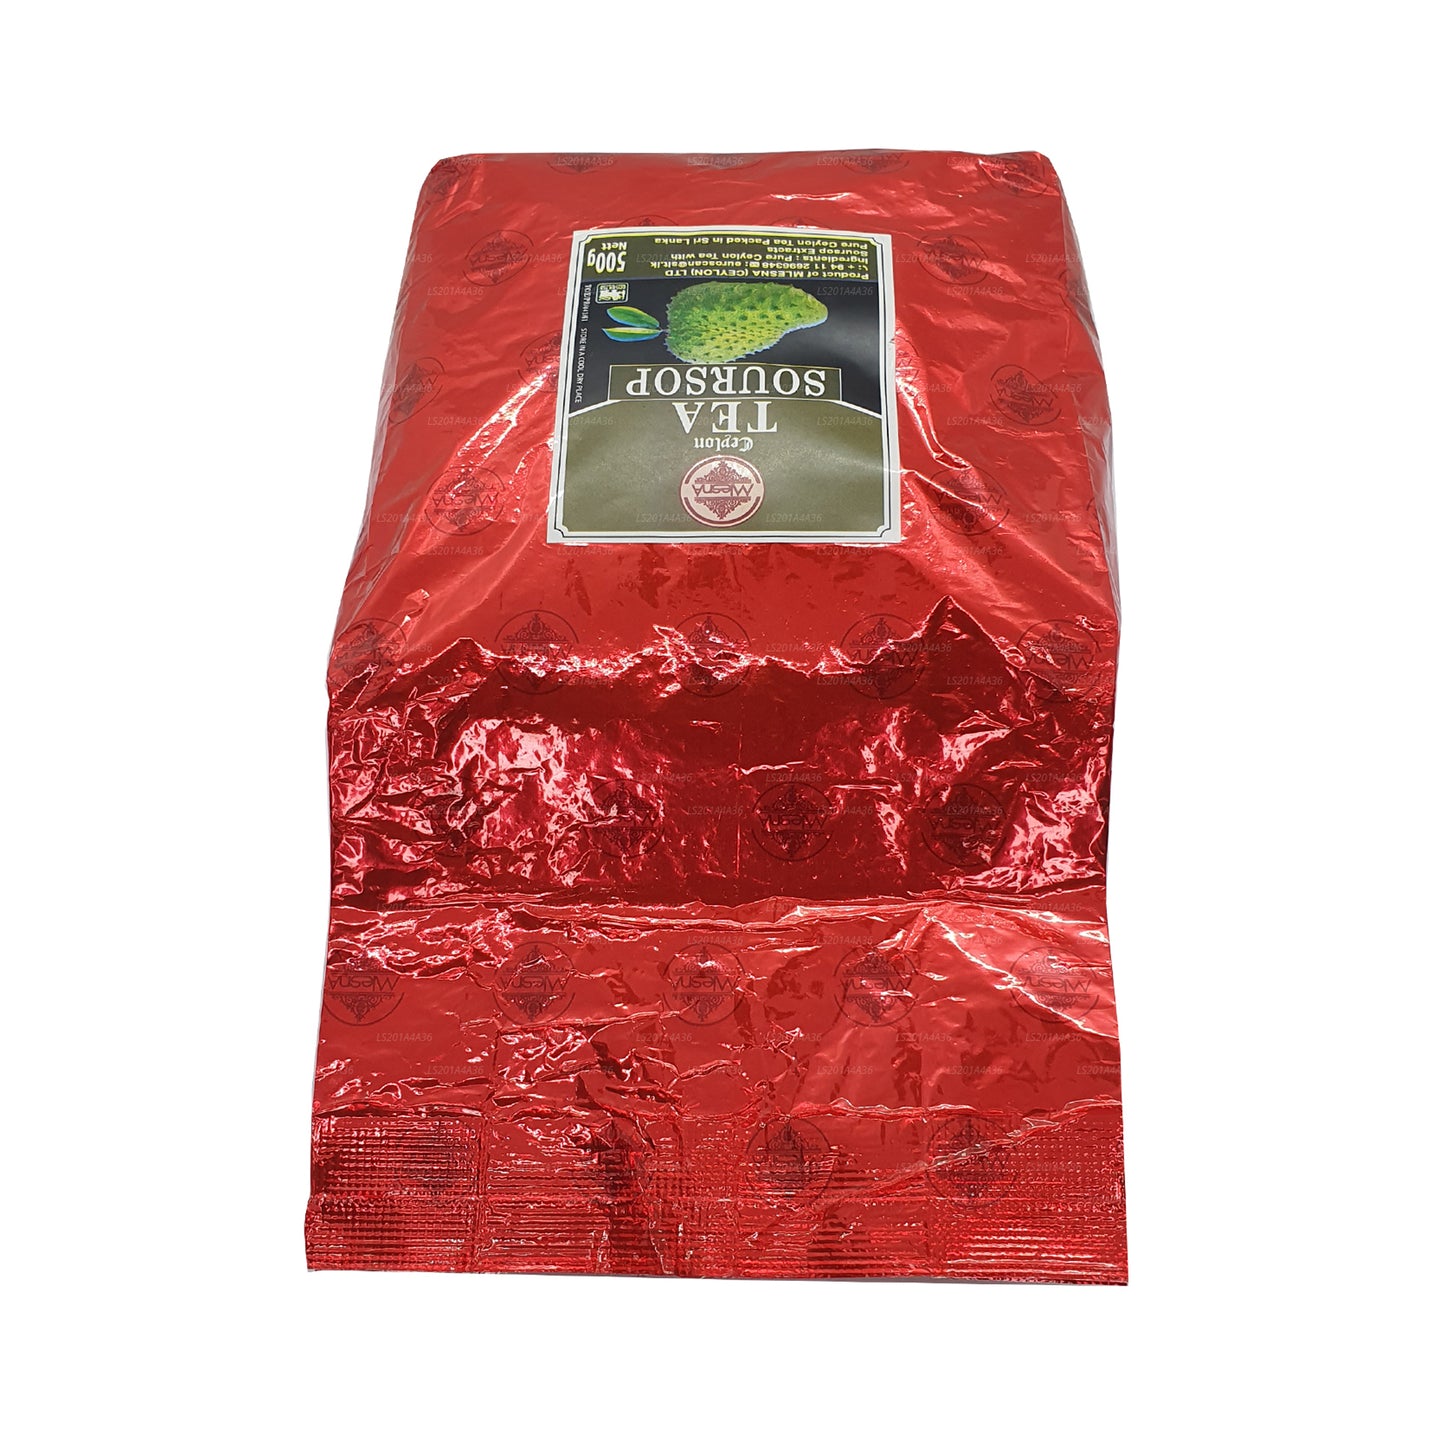 Mlesna Ceylon thee Zuurzak zwarte thee (500 g)